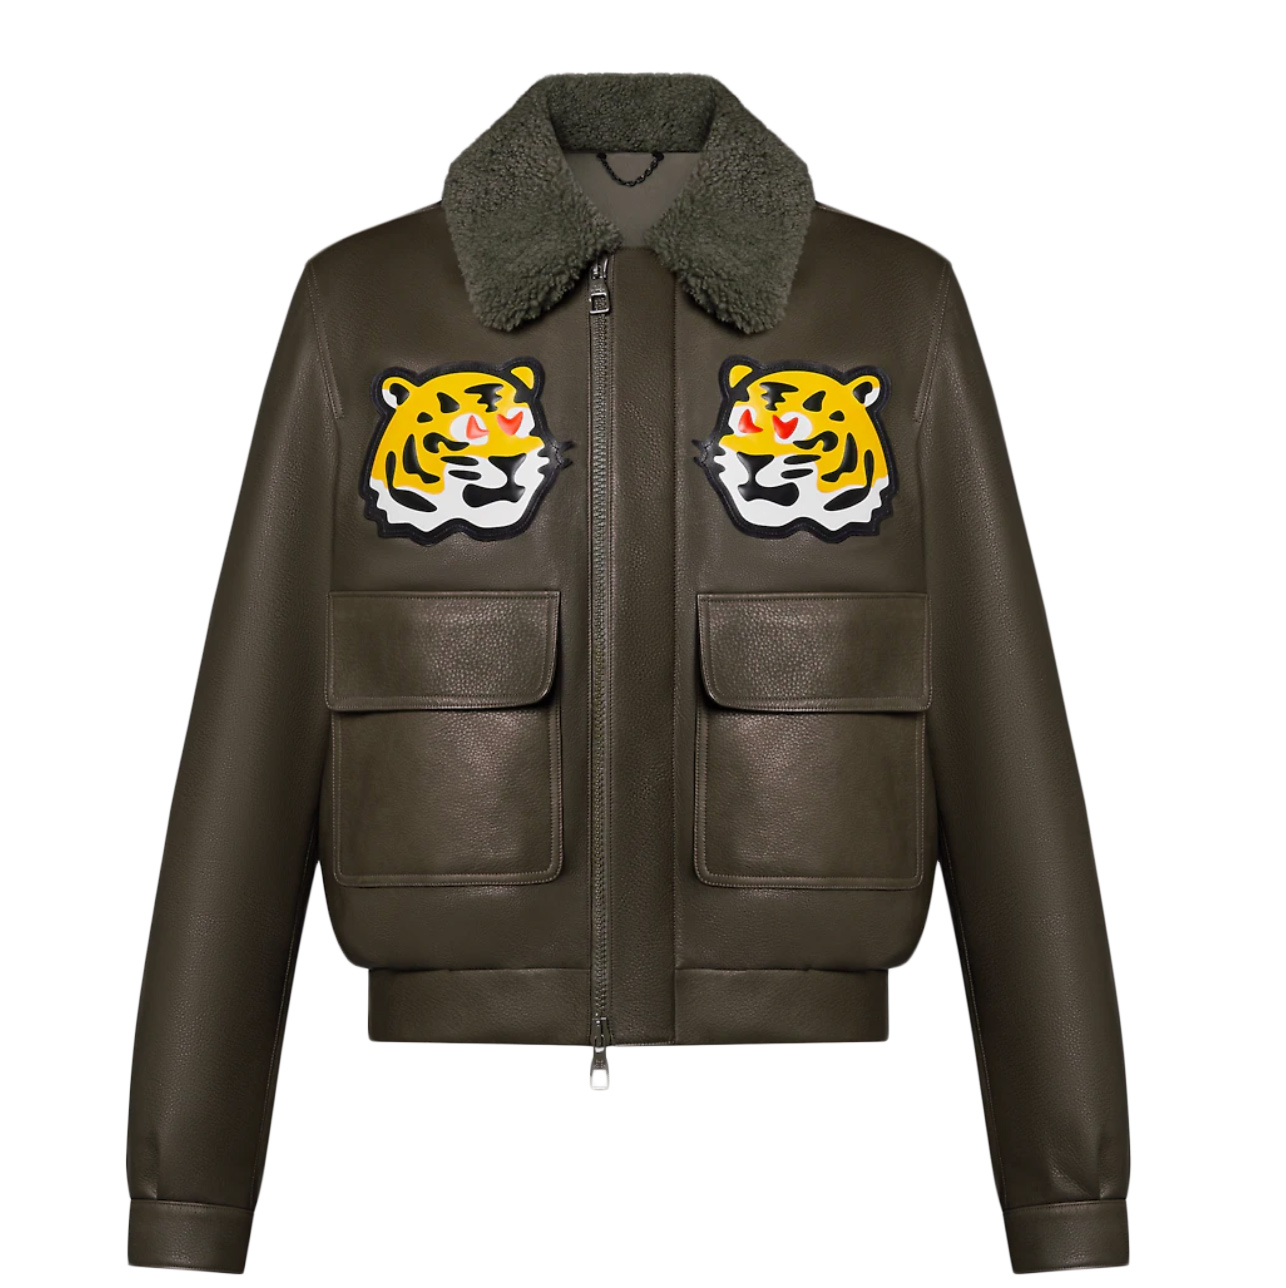 Louis Vuitton x Nigo Leather Blouson with Tiger Patches Jacket 